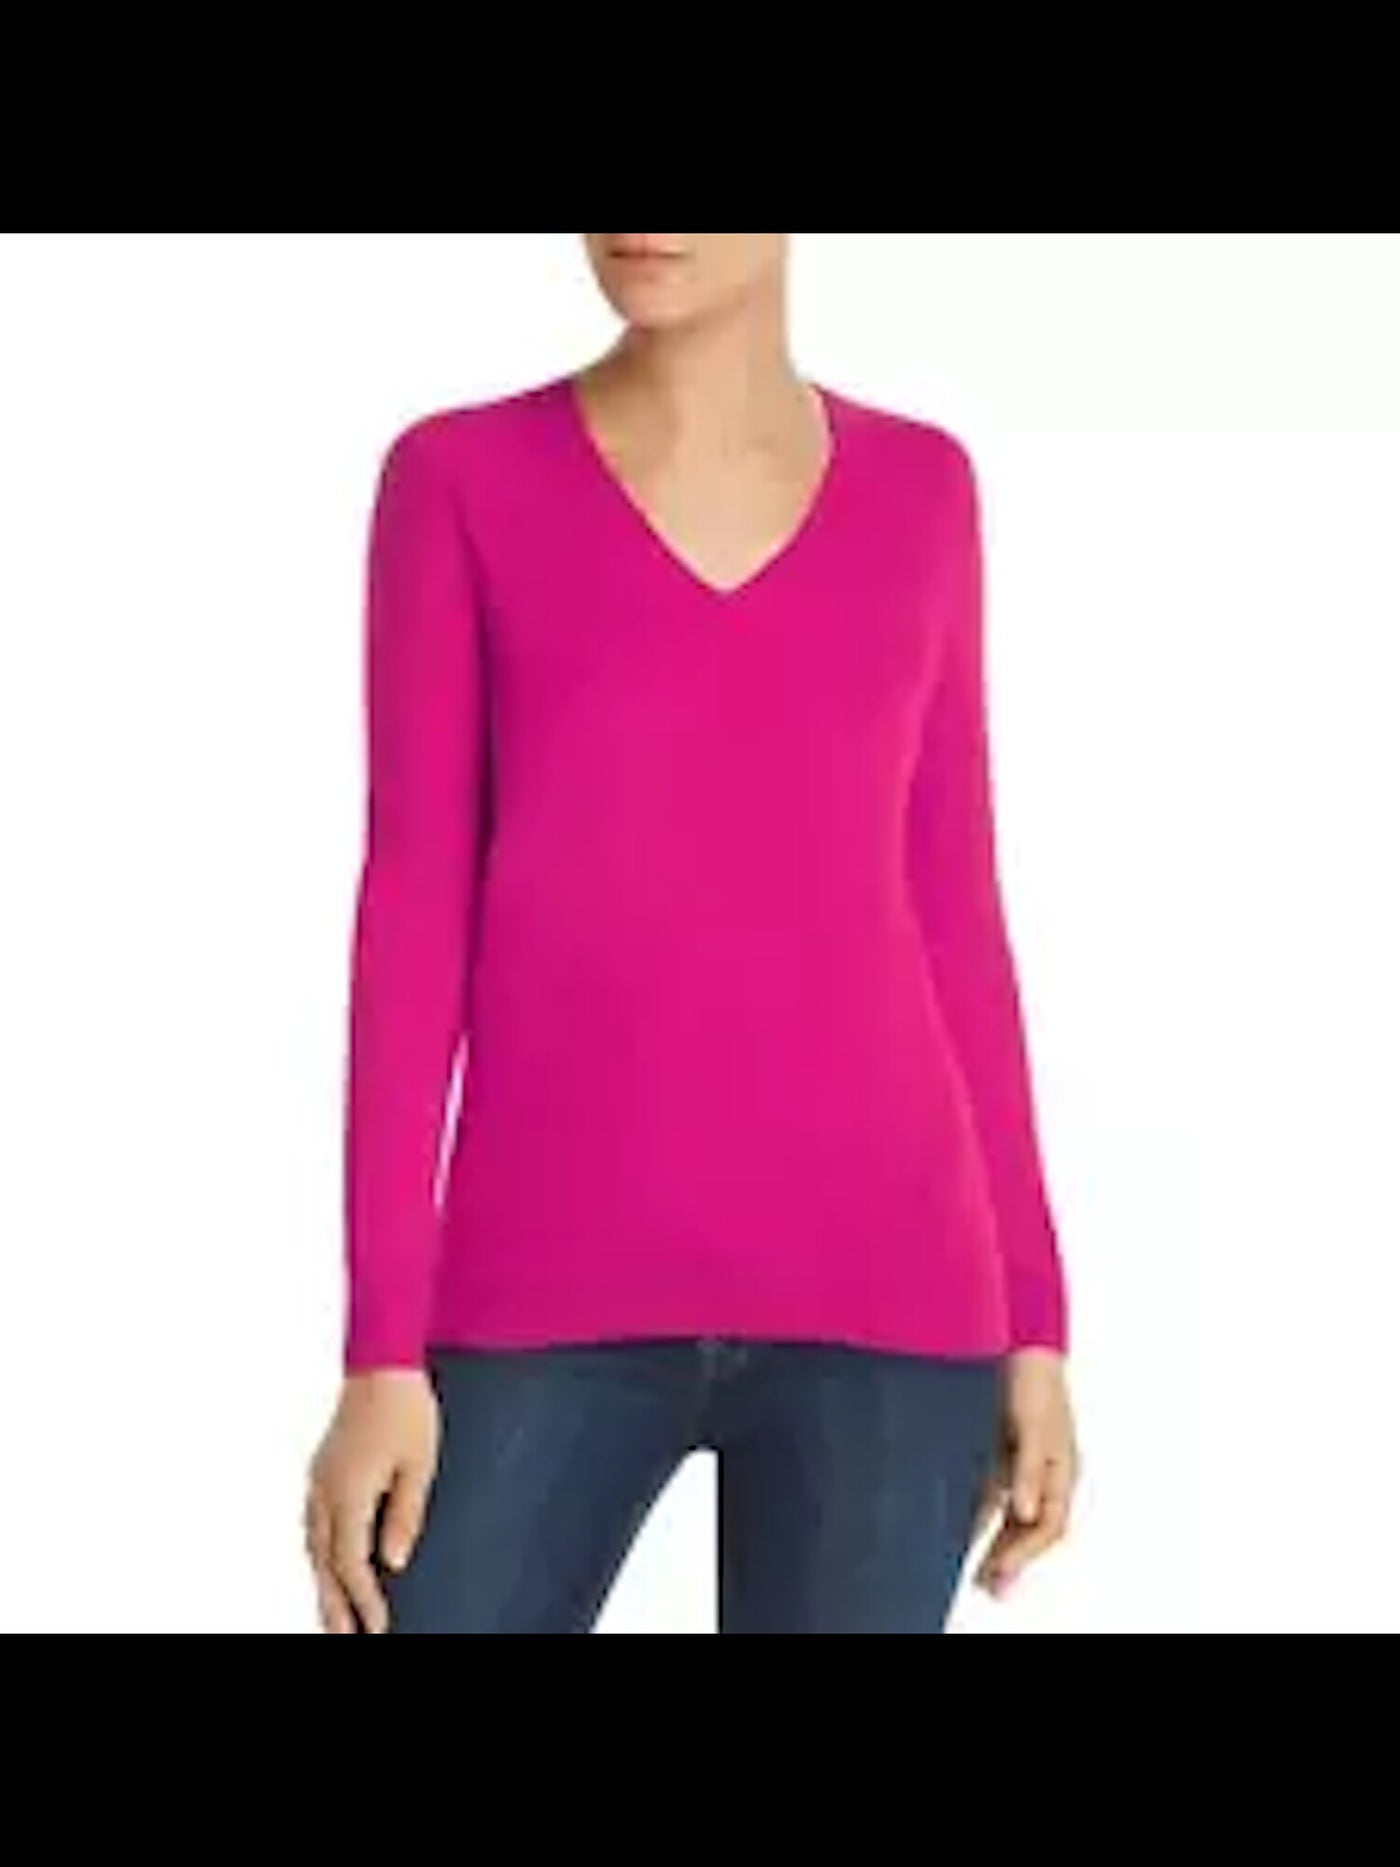 Designer Brand Womens Pink Cashmere Long Sleeve V Neck Wear To Work Sweater XL